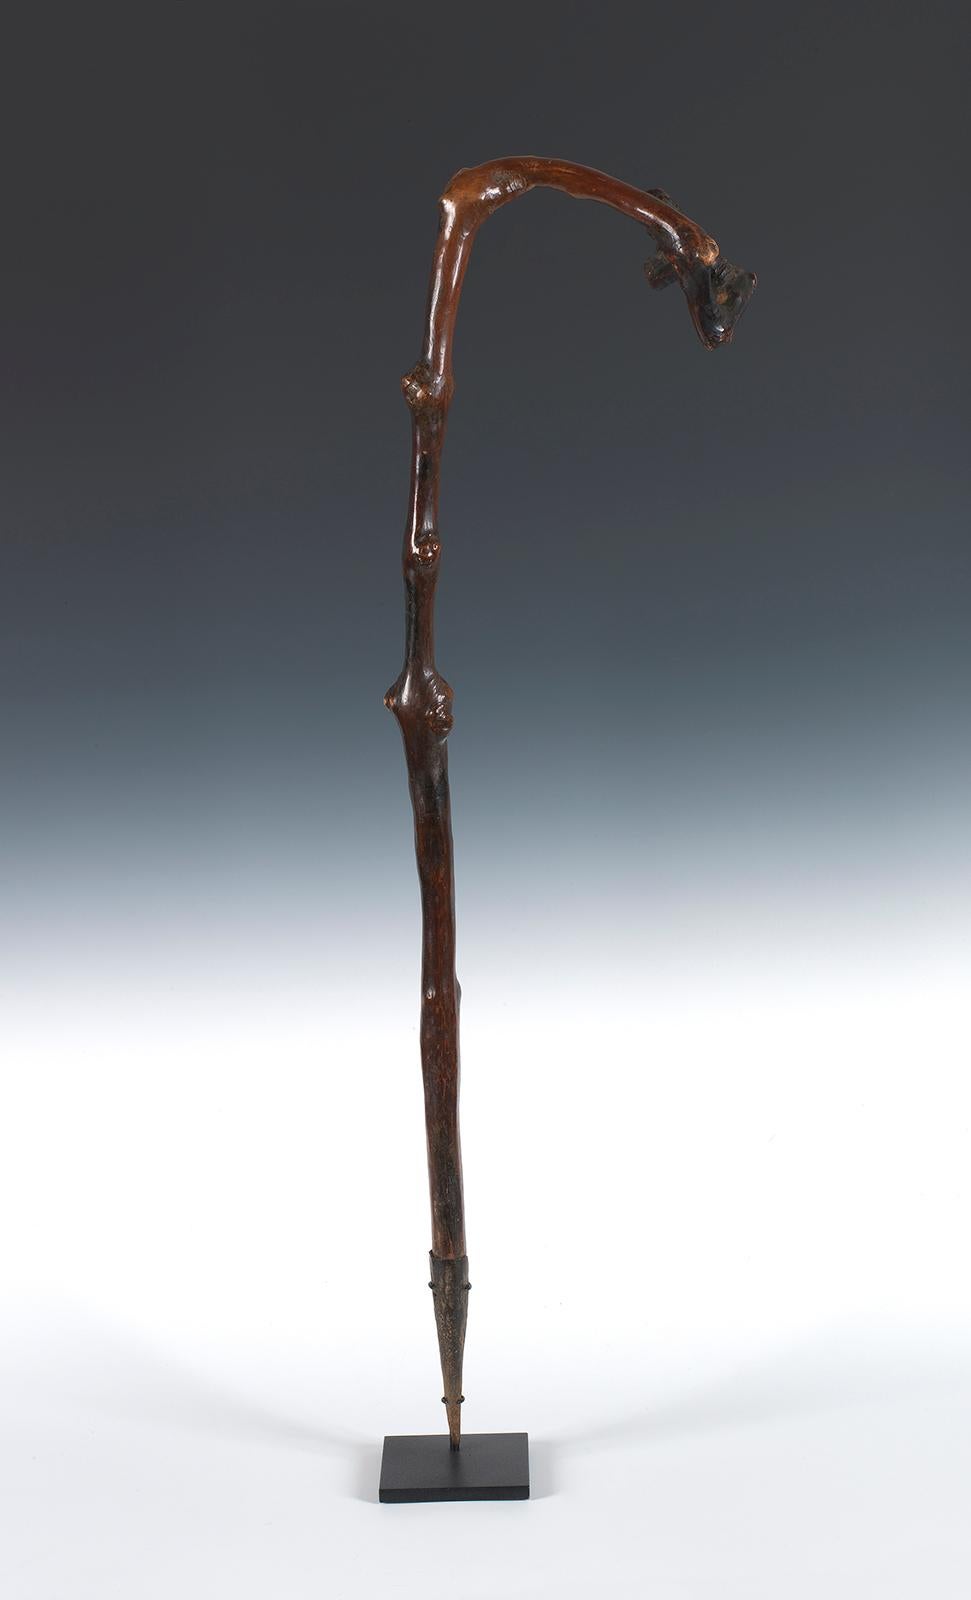 Walking or Ceremonial stick
Bamileke People
Cameroon
20th century
Wood, hand cast metal tip
Measures: 33 1/2